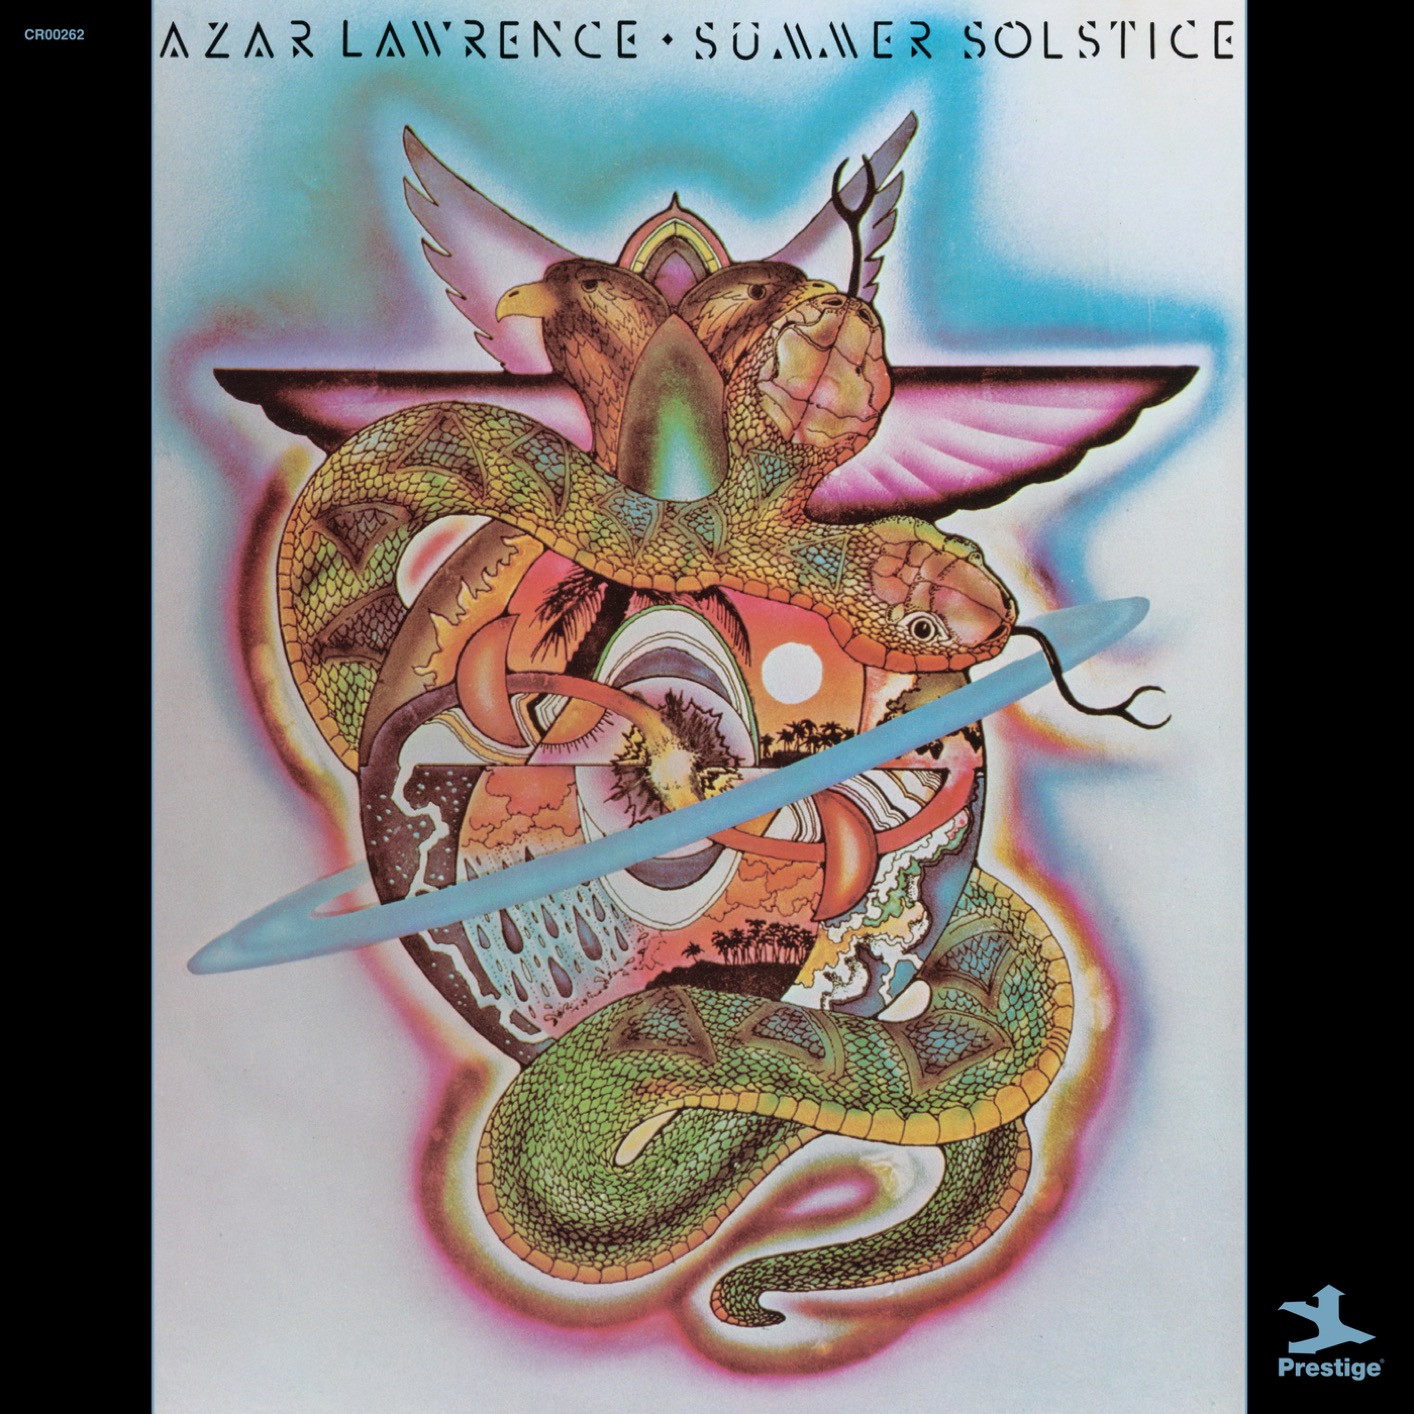 Azar Lawrence – Summer Solstice (Remastered) (1975/2019) [FLAC 24bit/192kHz]